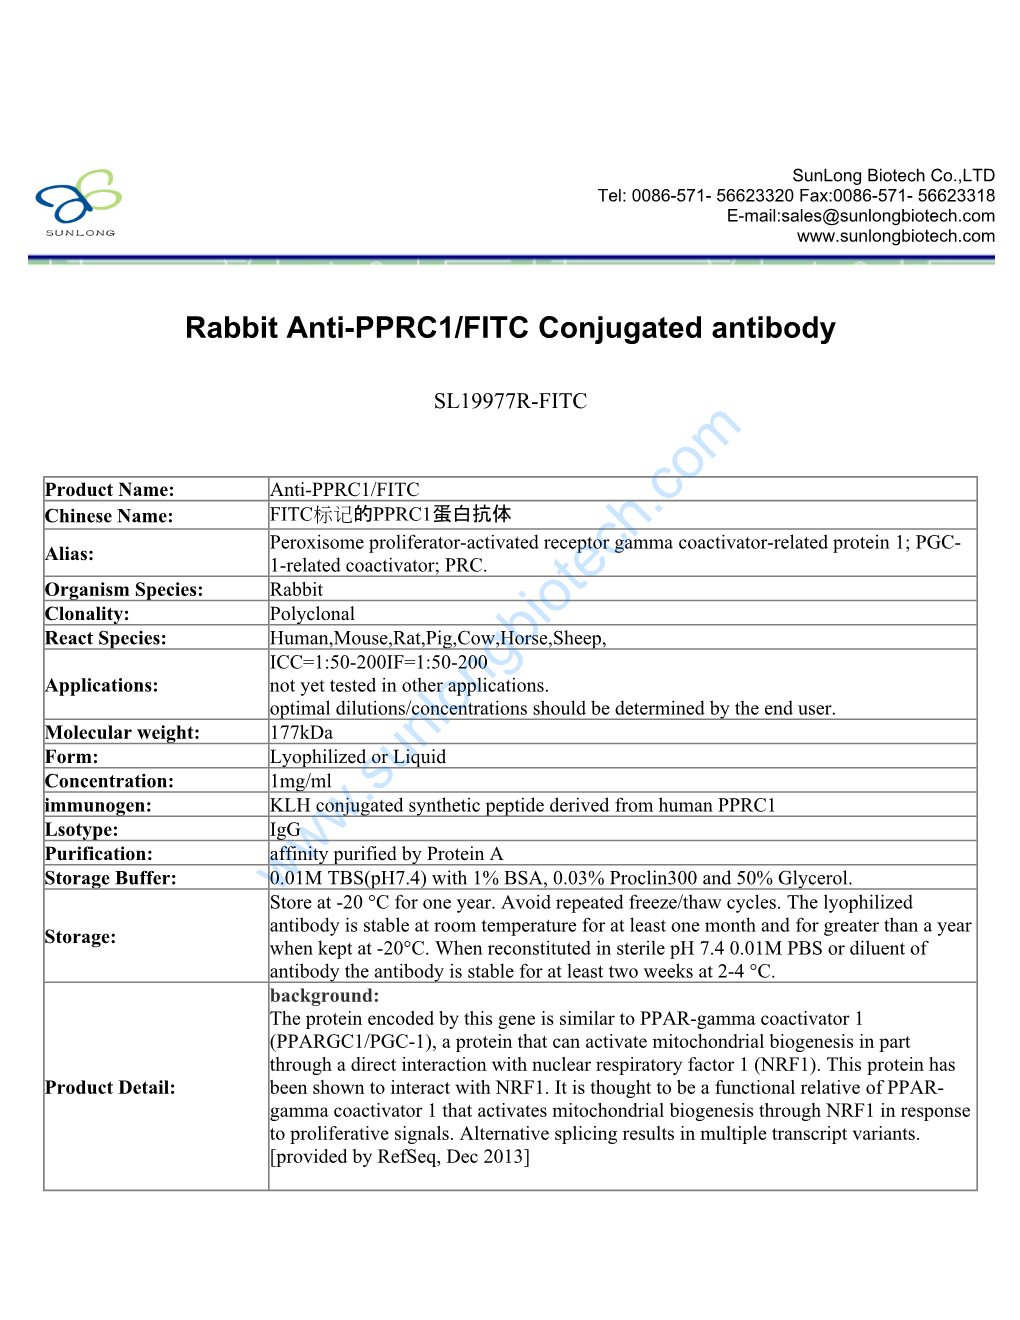 Rabbit Anti-PPRC1/FITC Conjugated Antibody